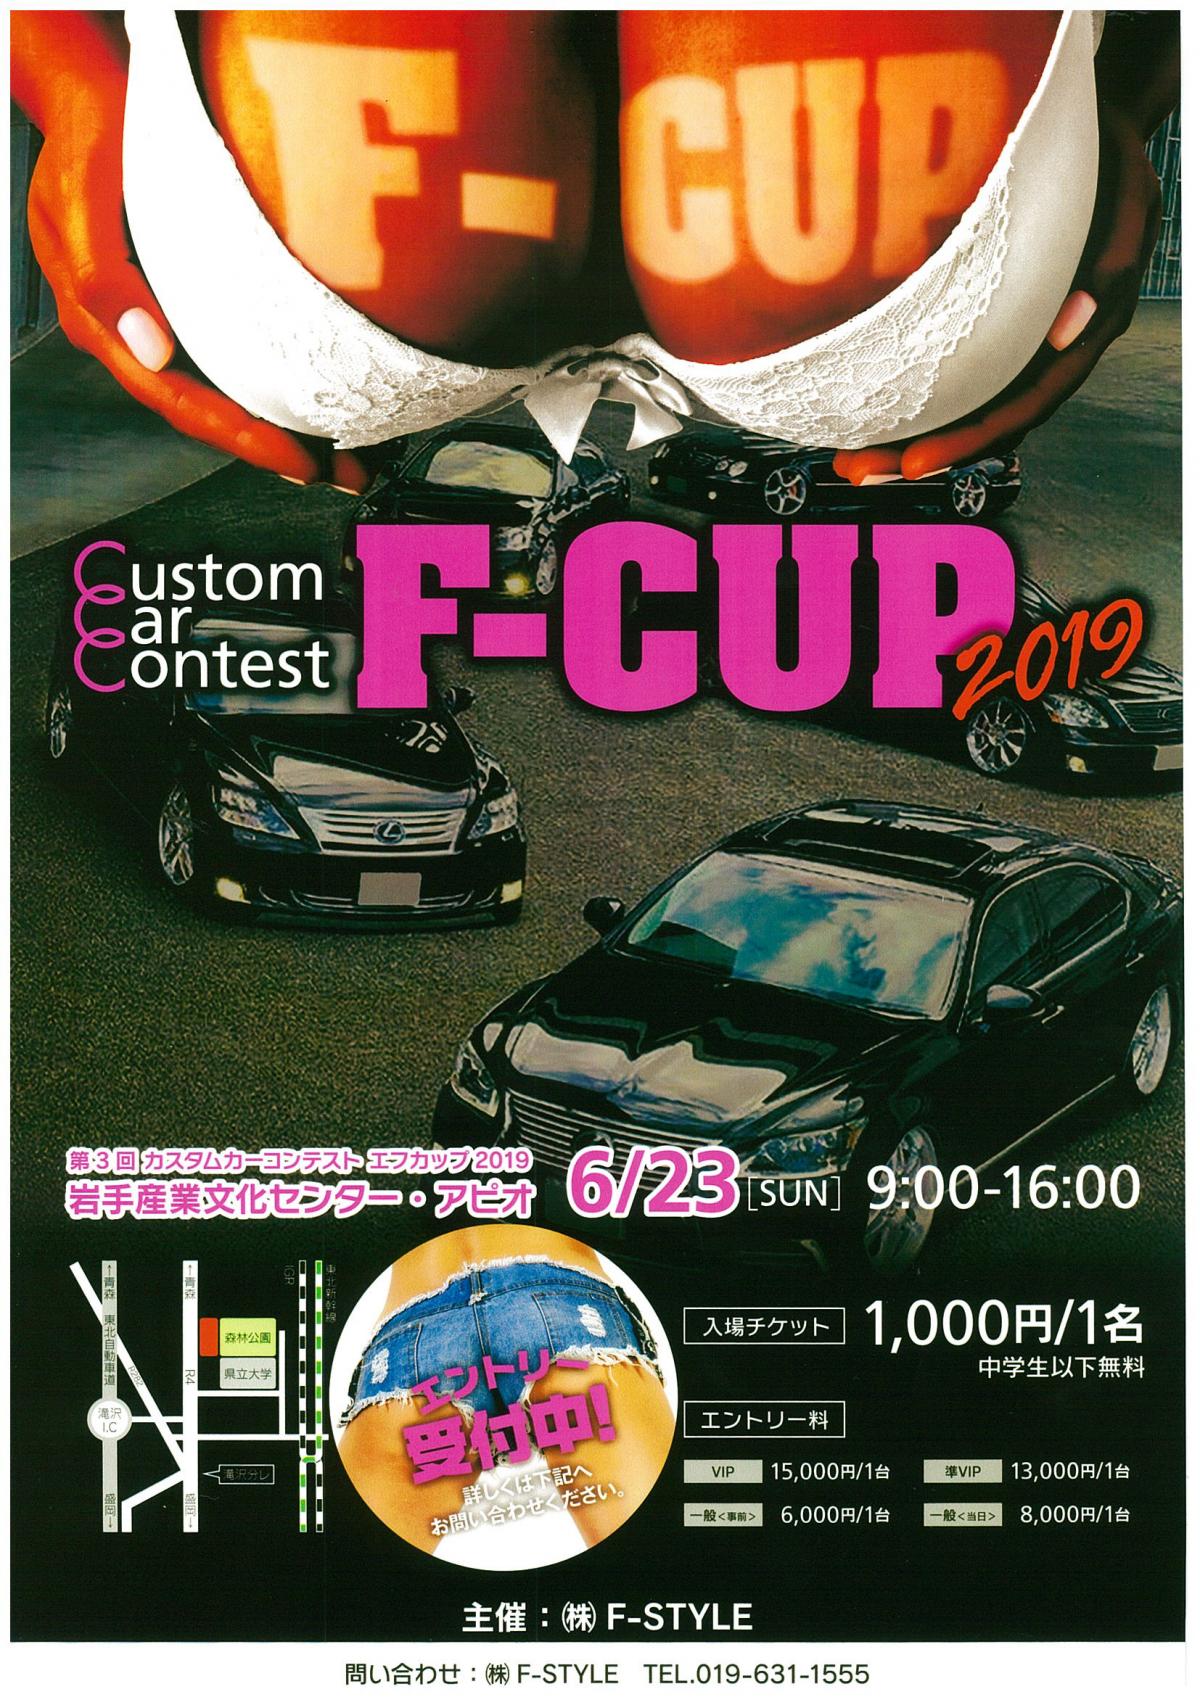 Custom Car Contest F-CUP 2019